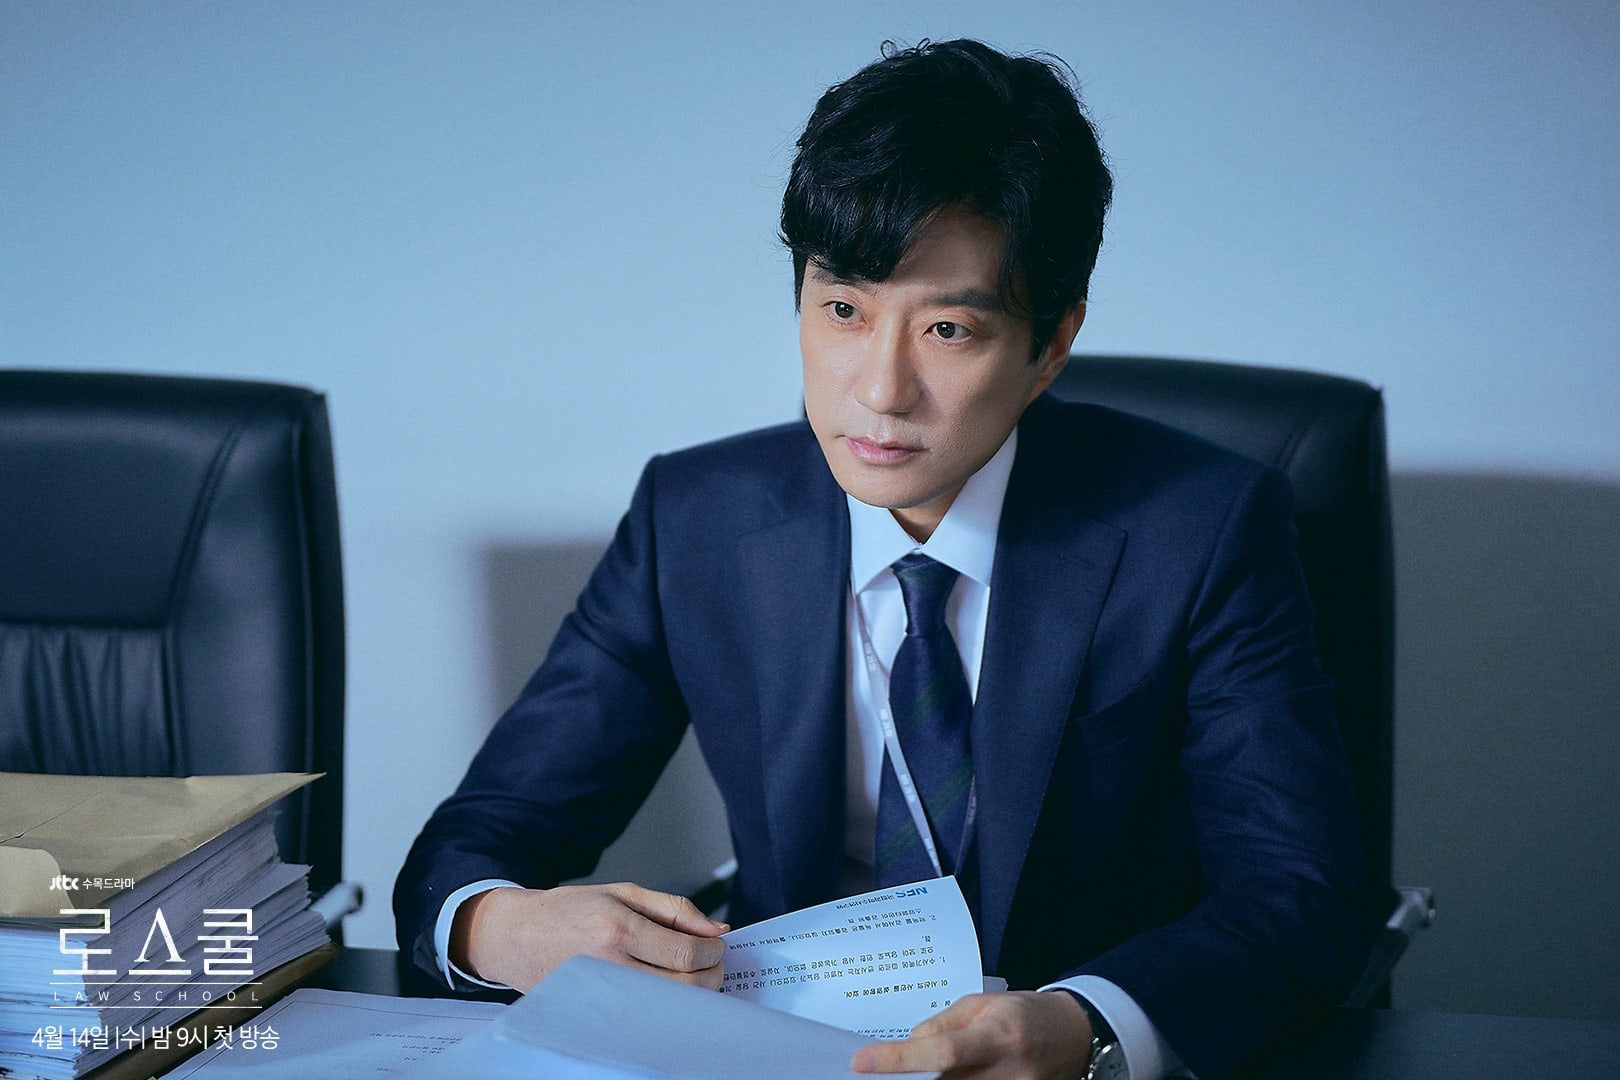 Law School K-Drama Cast: Know All About Them